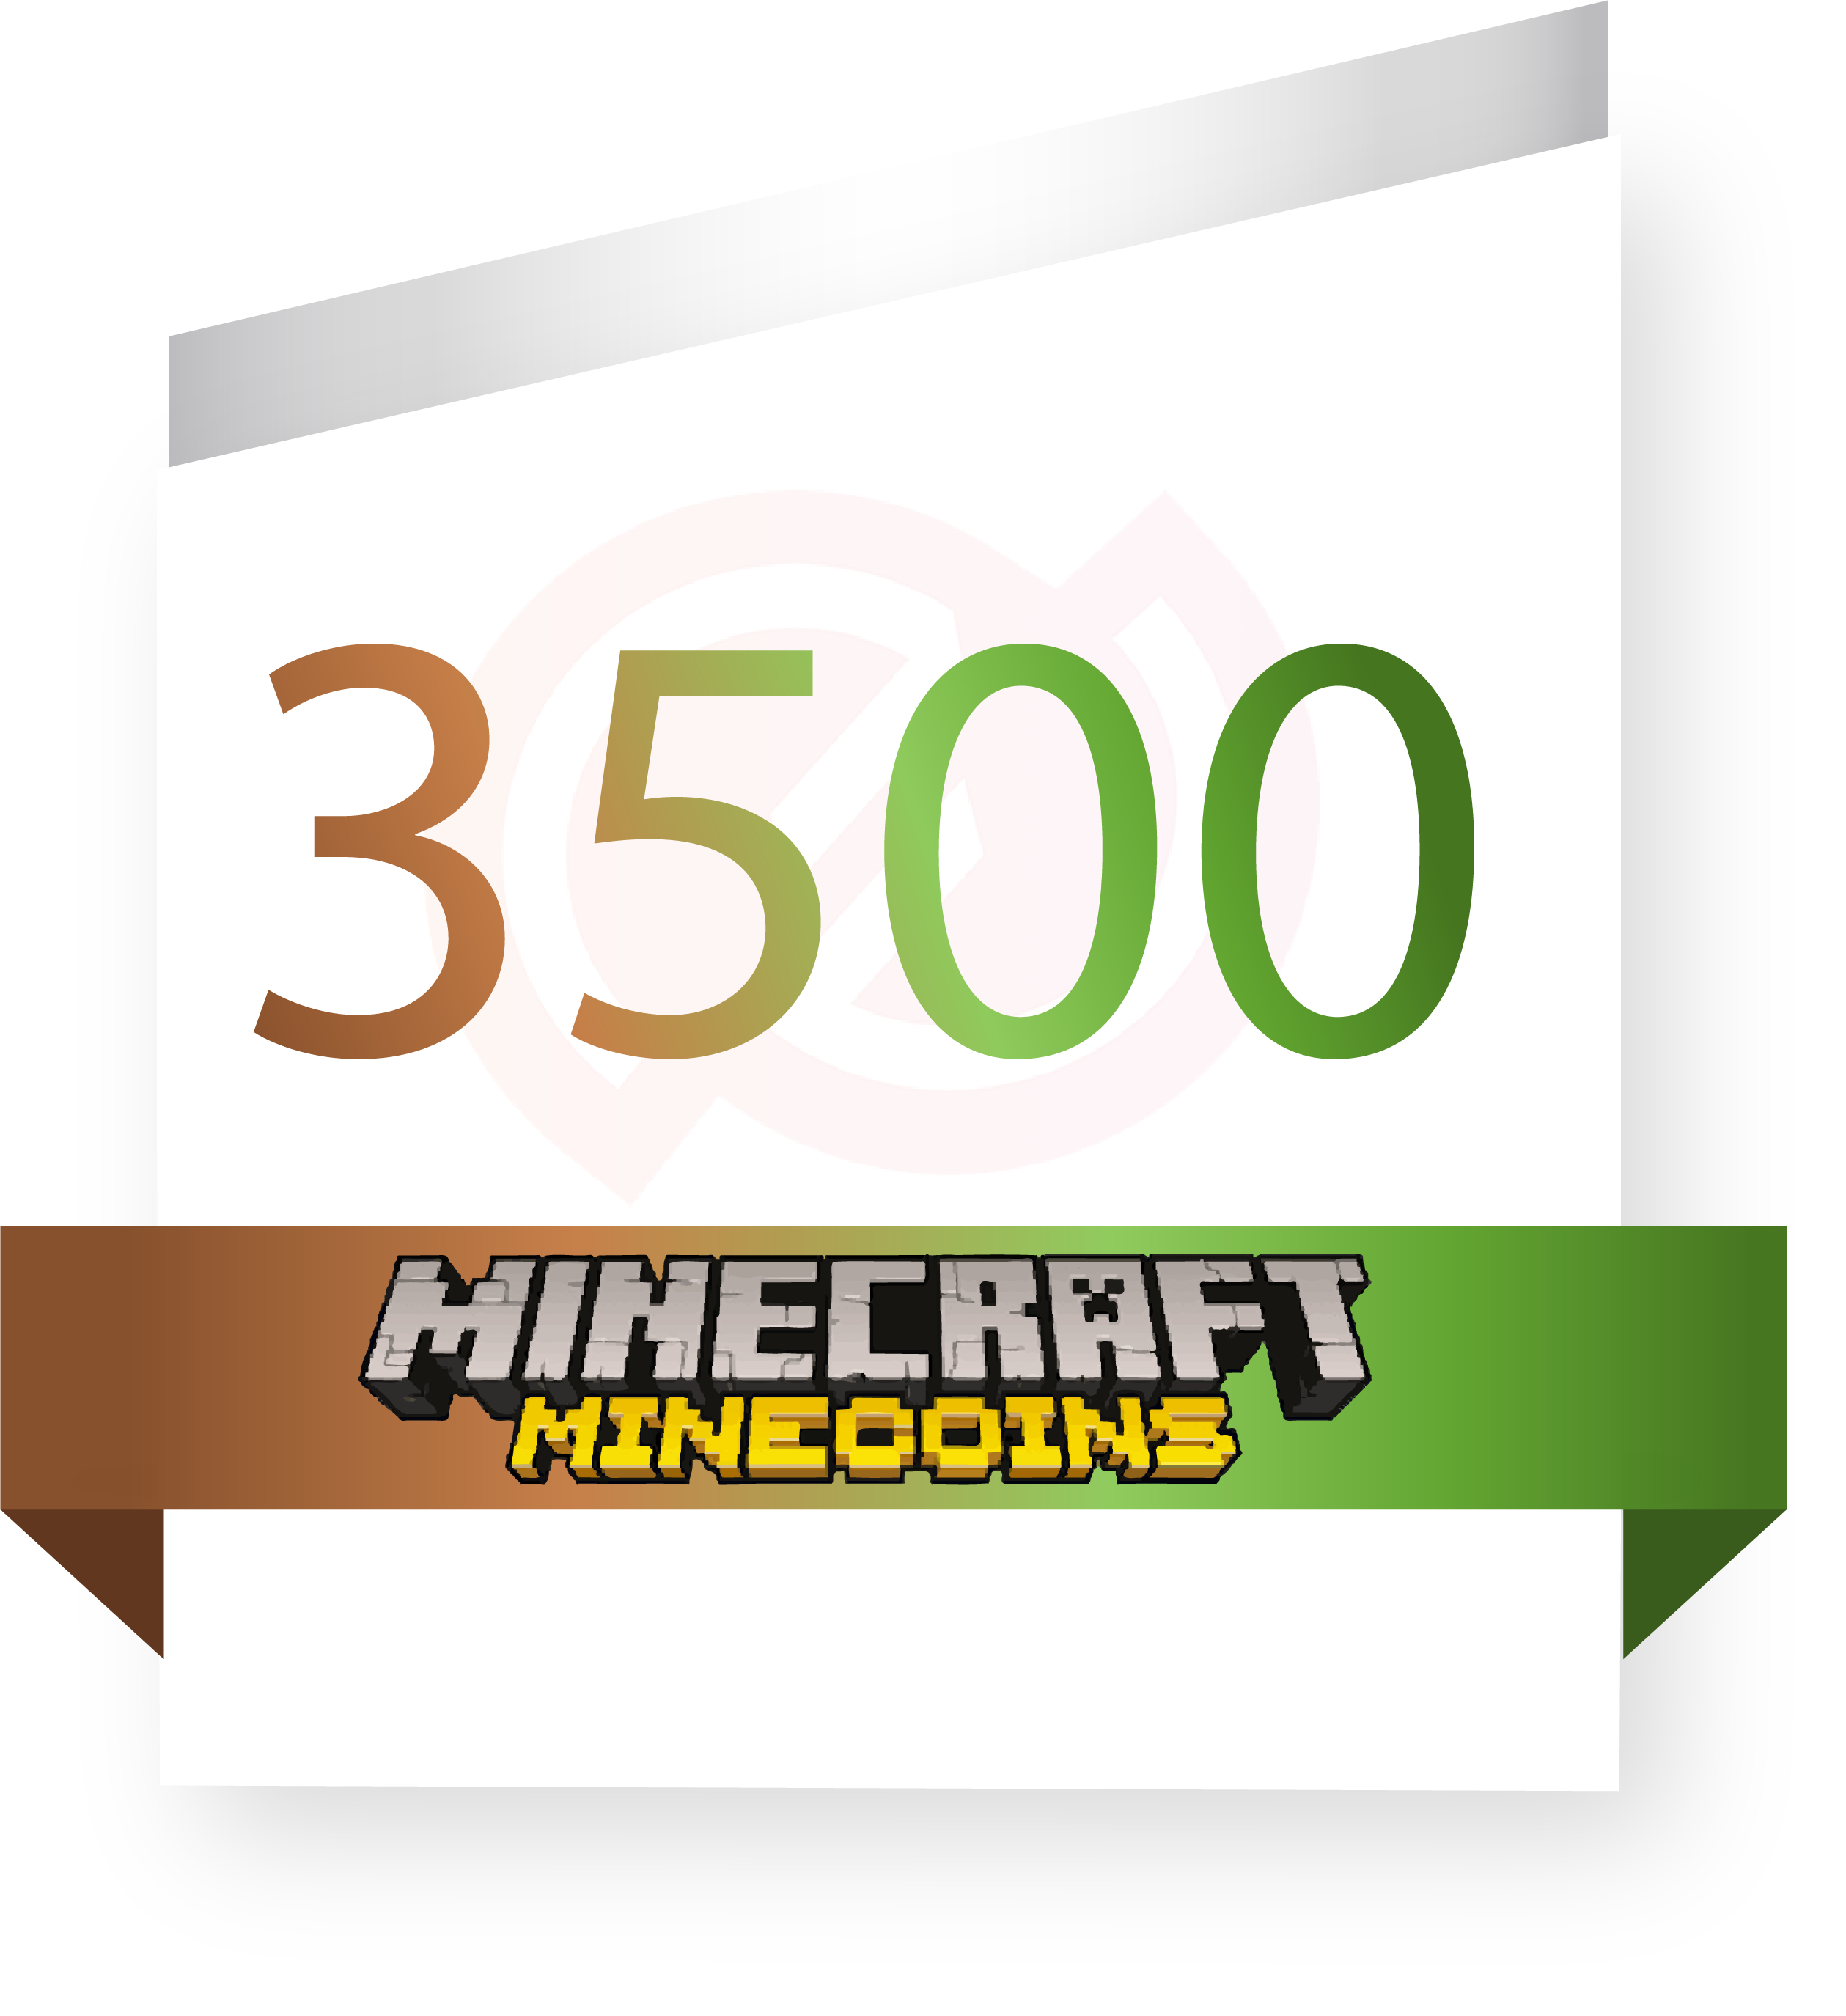 Coupon minecraft-3500-minecoins